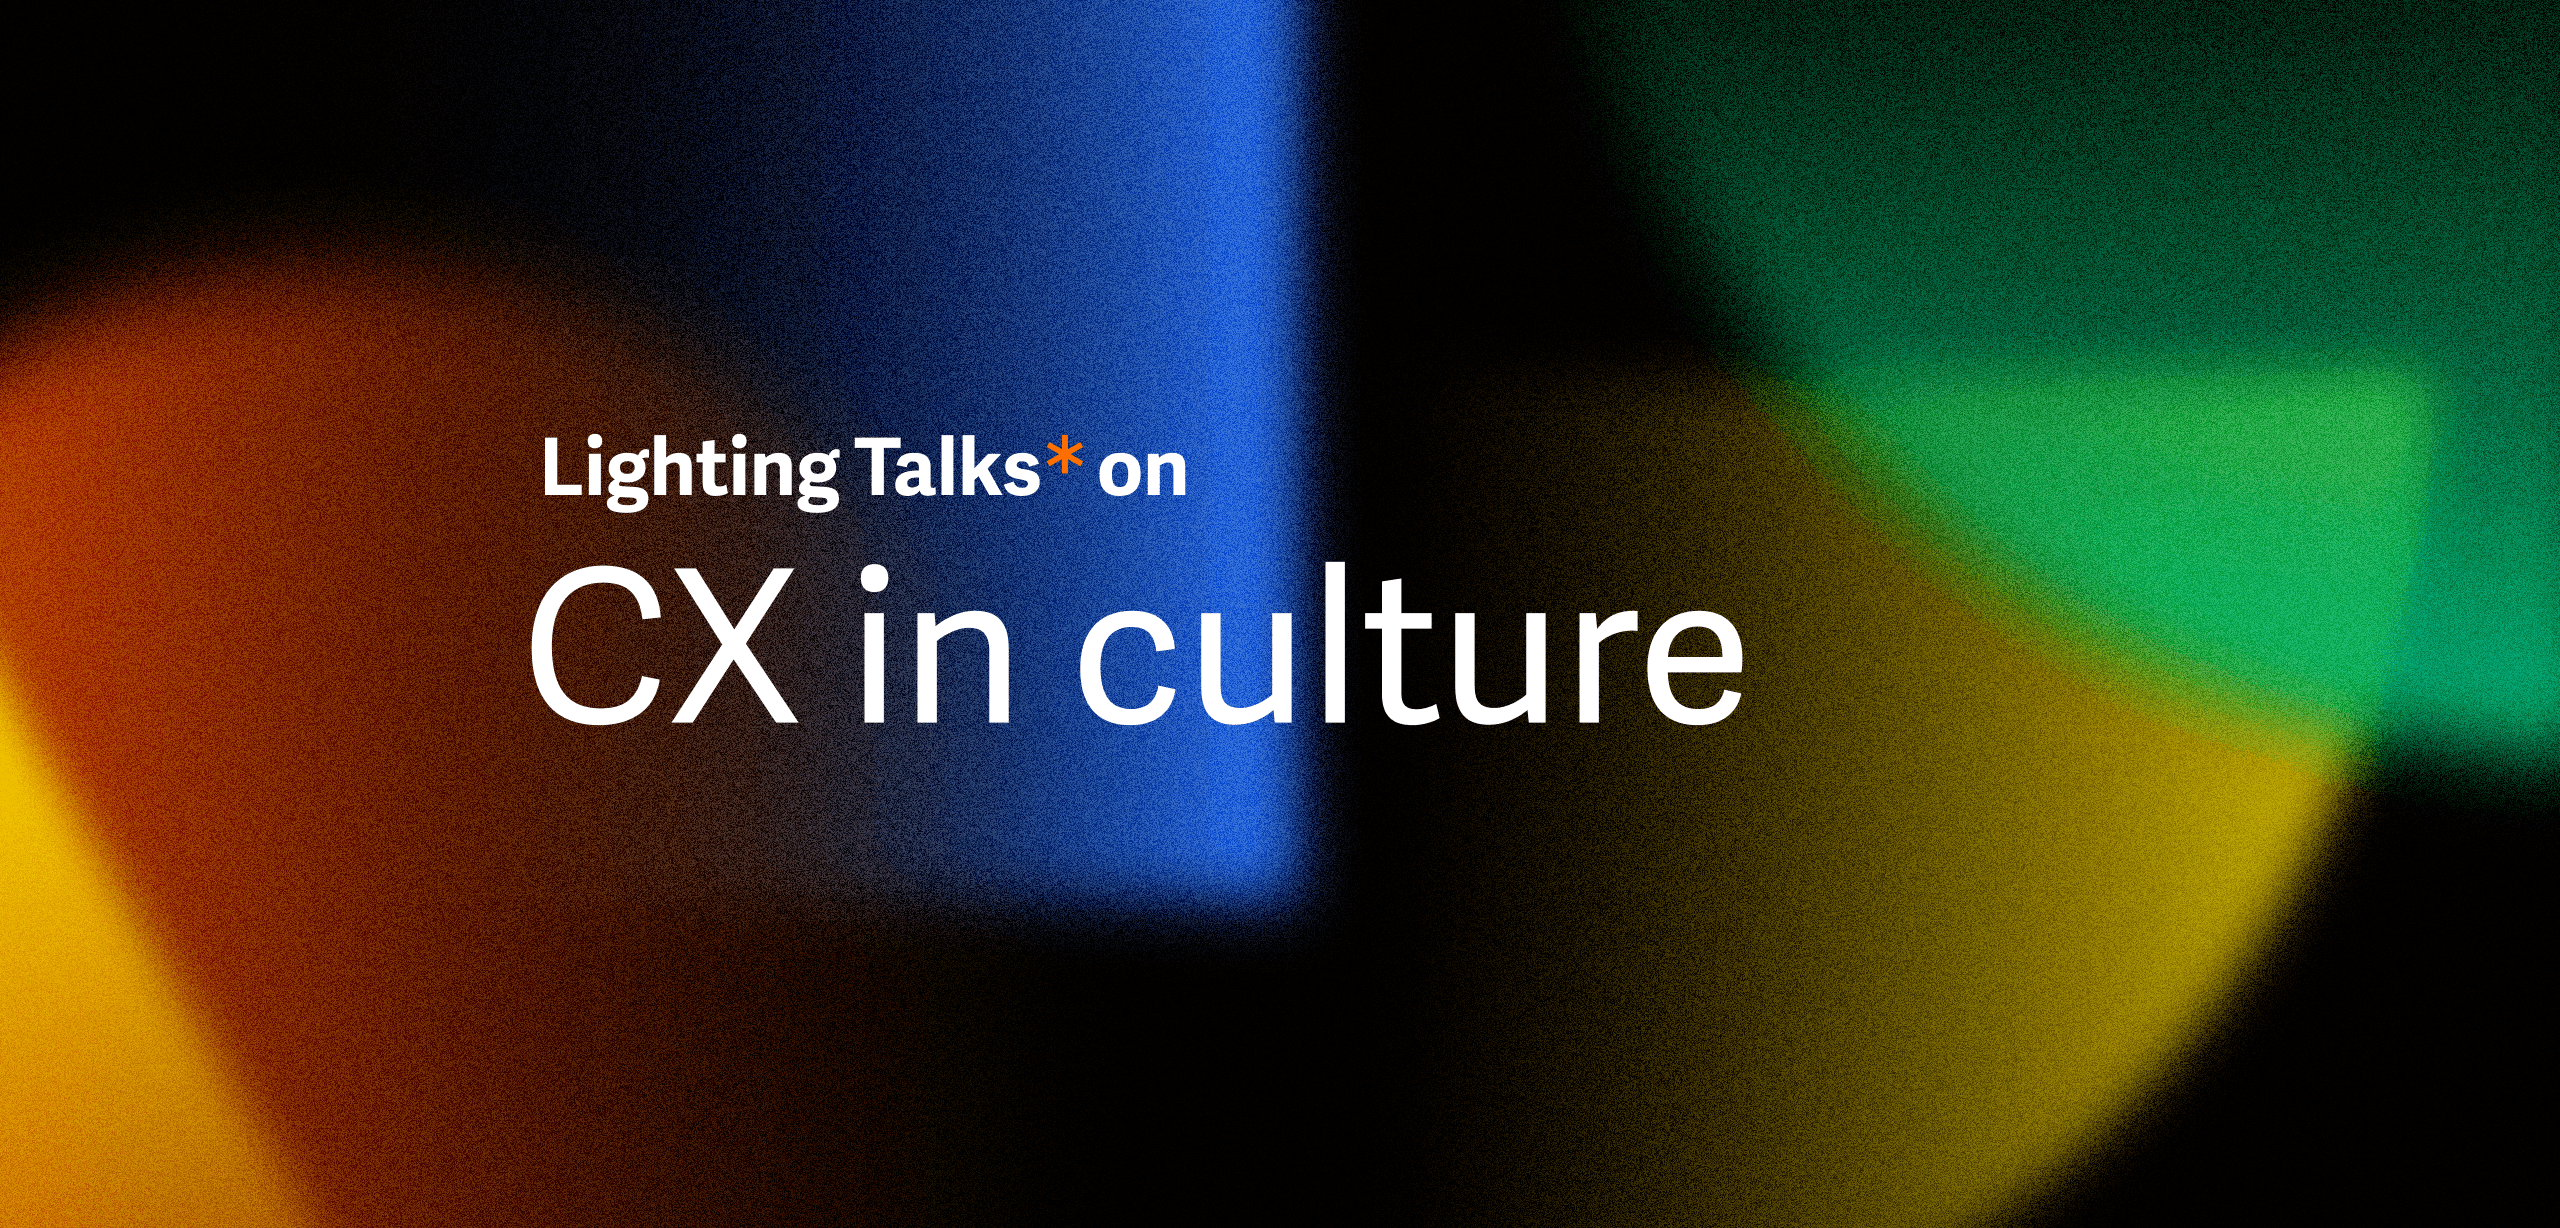 Lighting Talks* on CX in culture